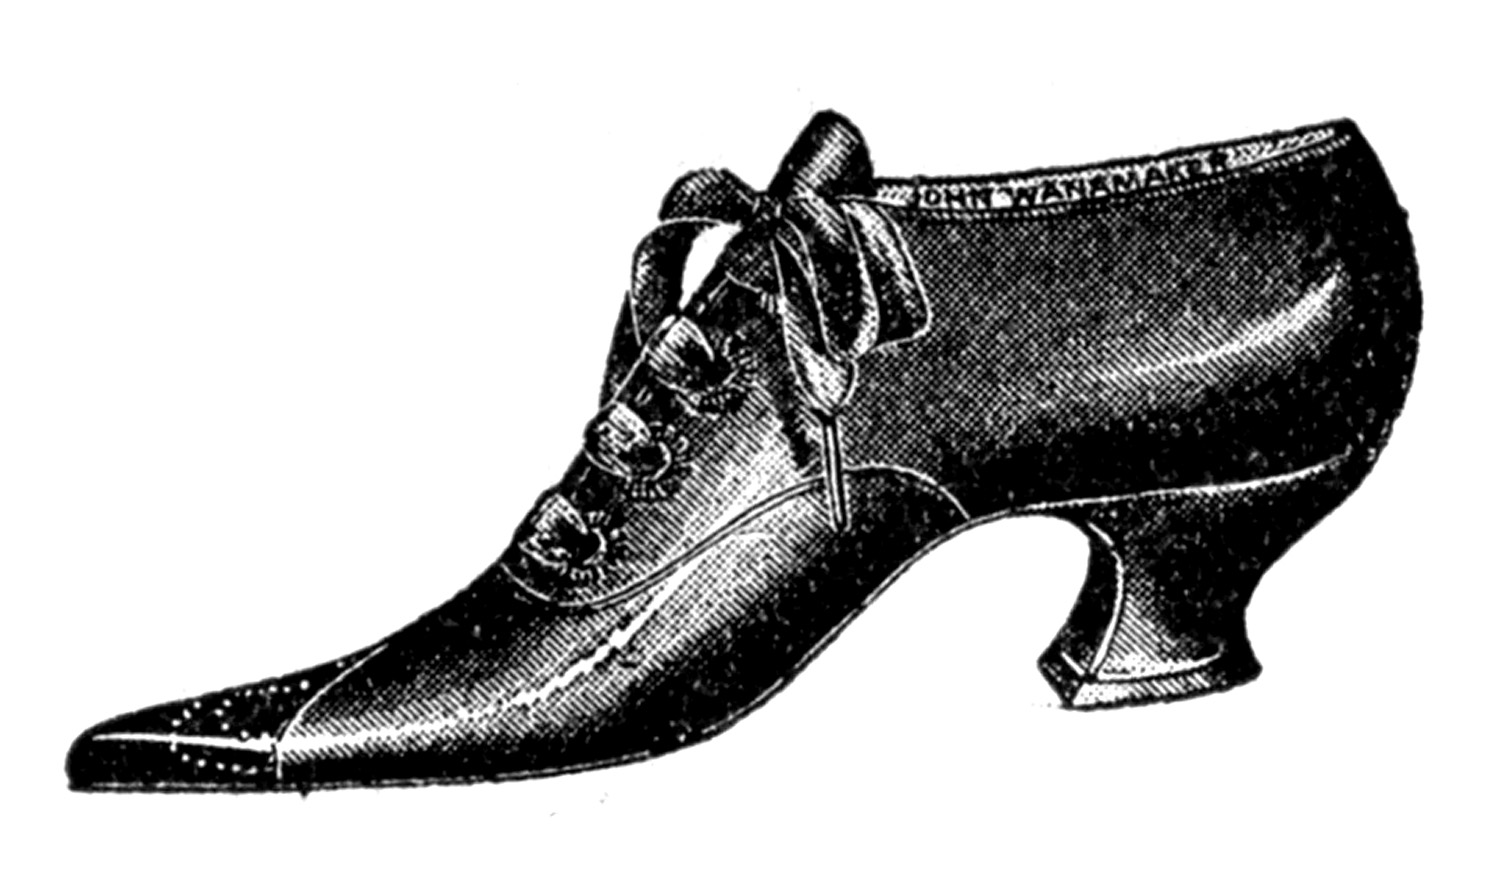 Vintage shoes Vectors & Illustrations for Free Download | Freepik